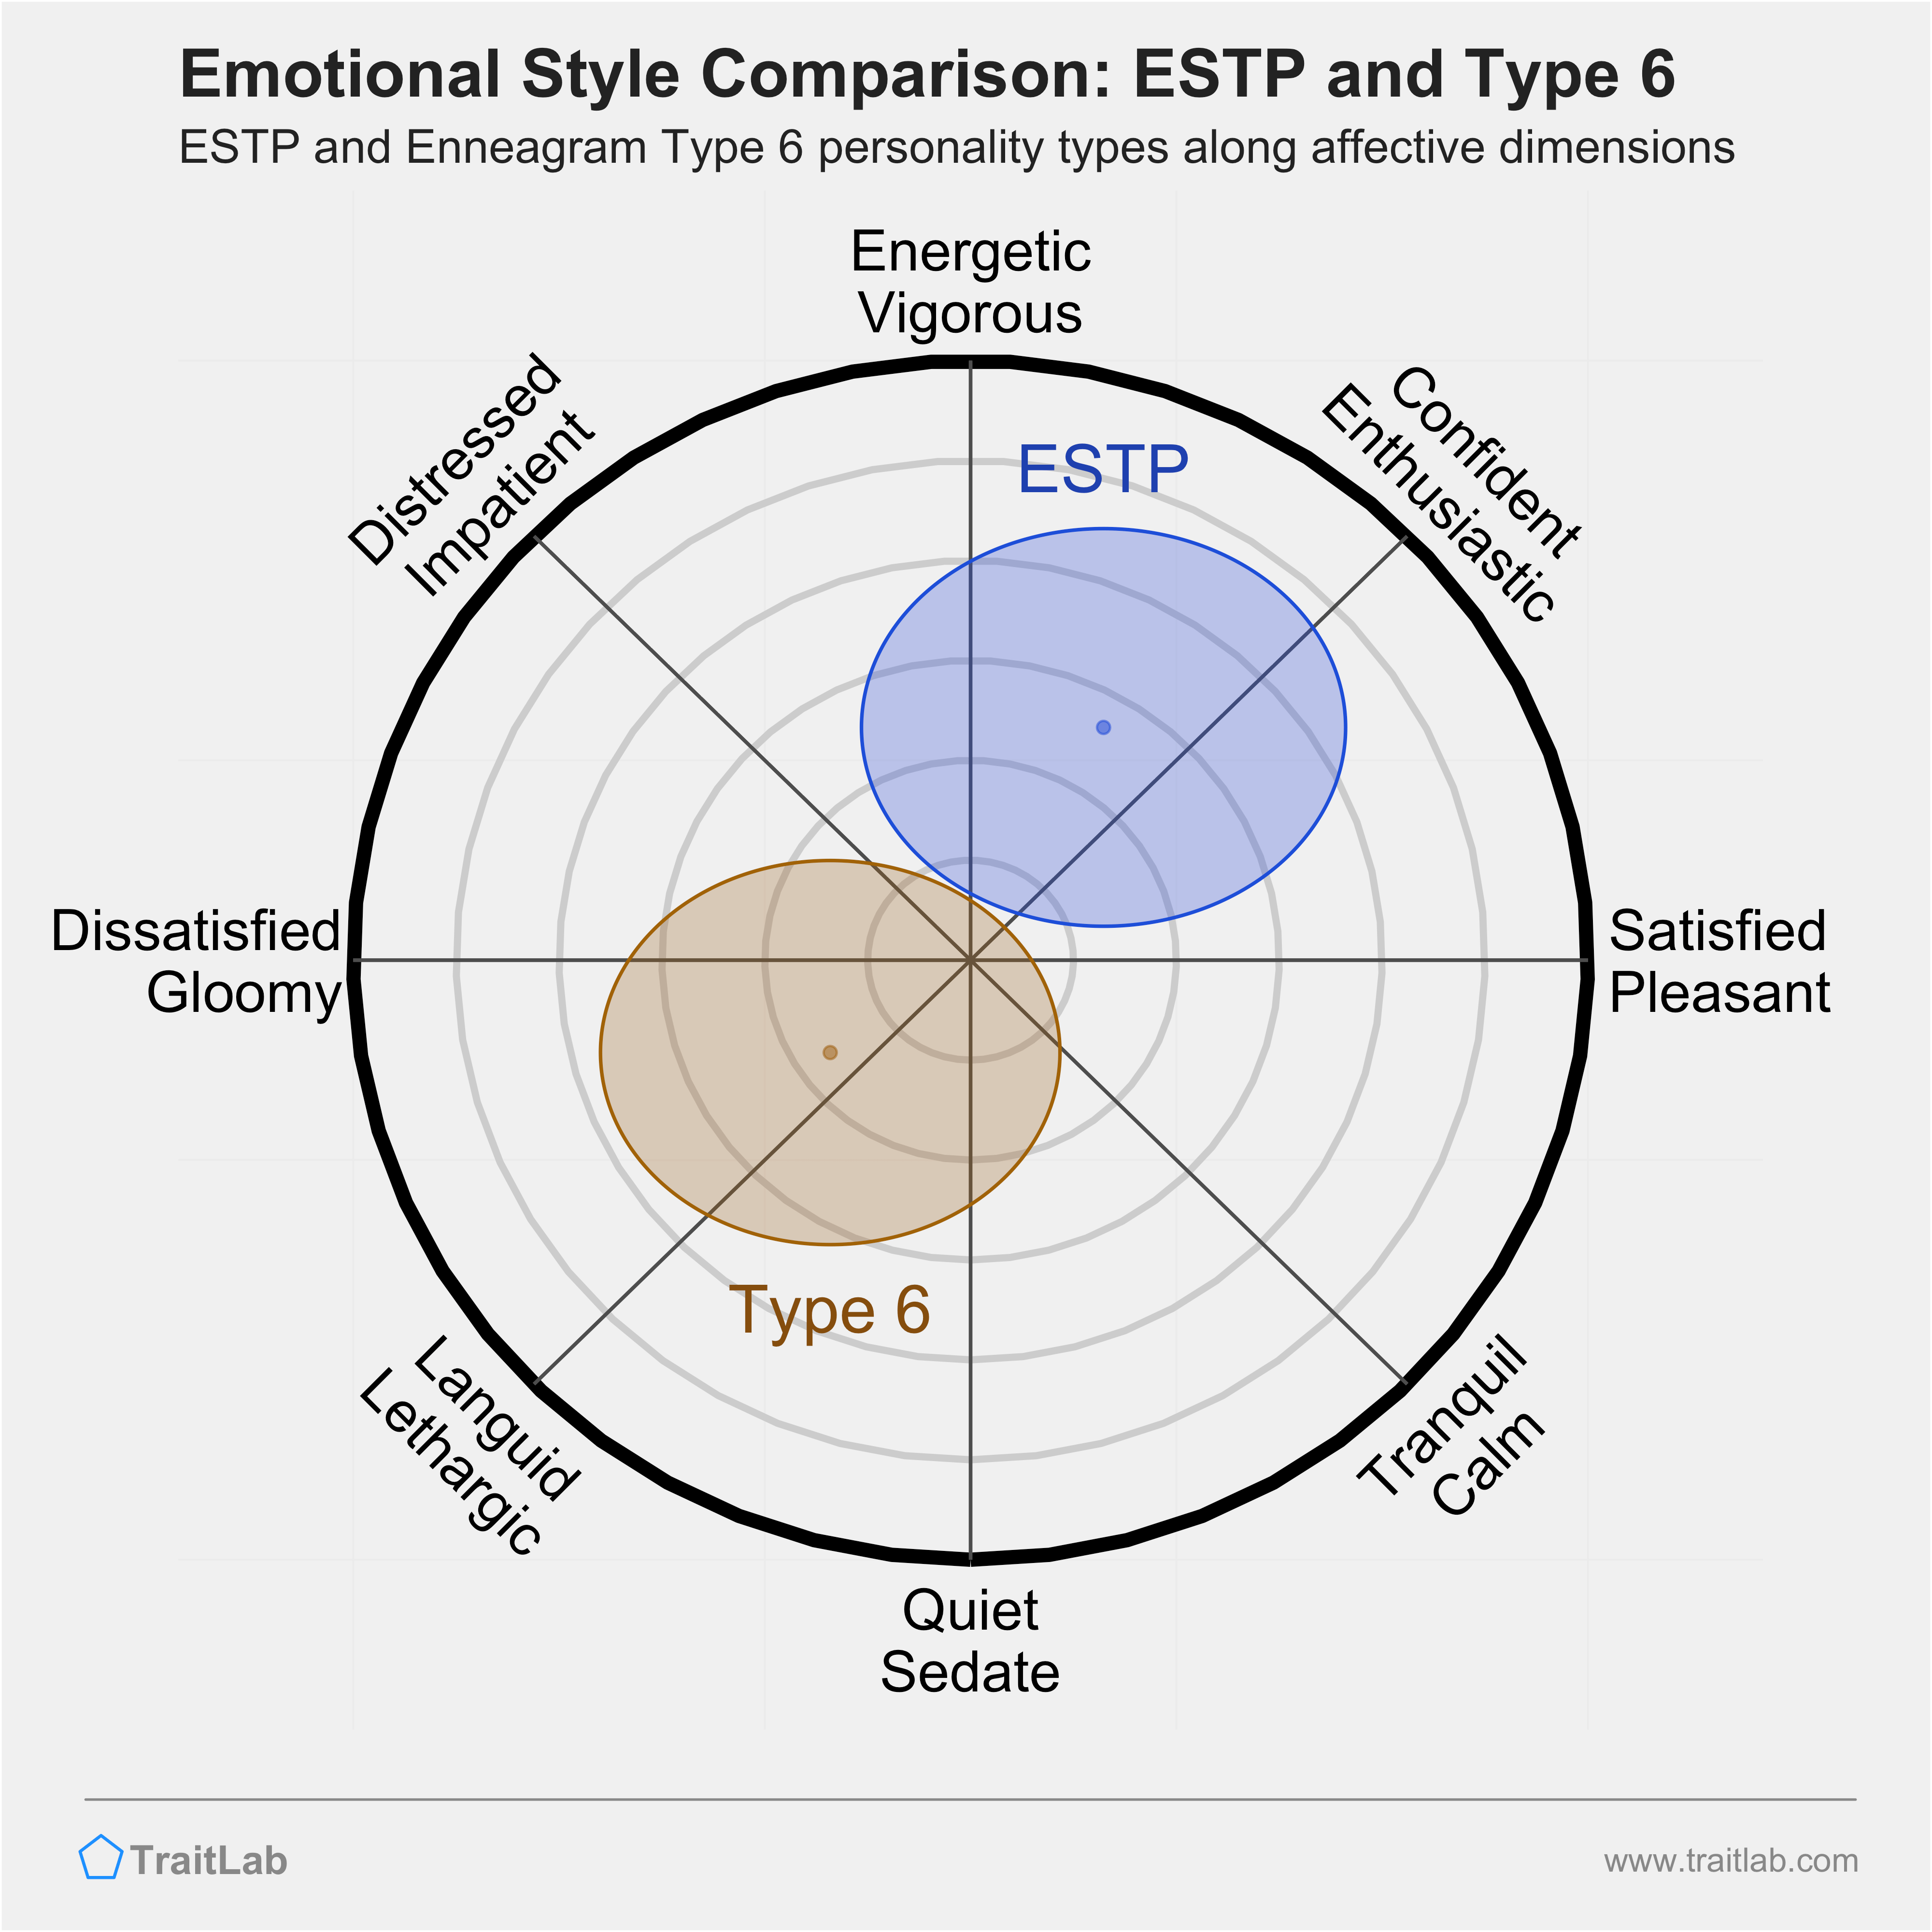 ESTP and Type 6 comparison across emotional (affective) dimensions